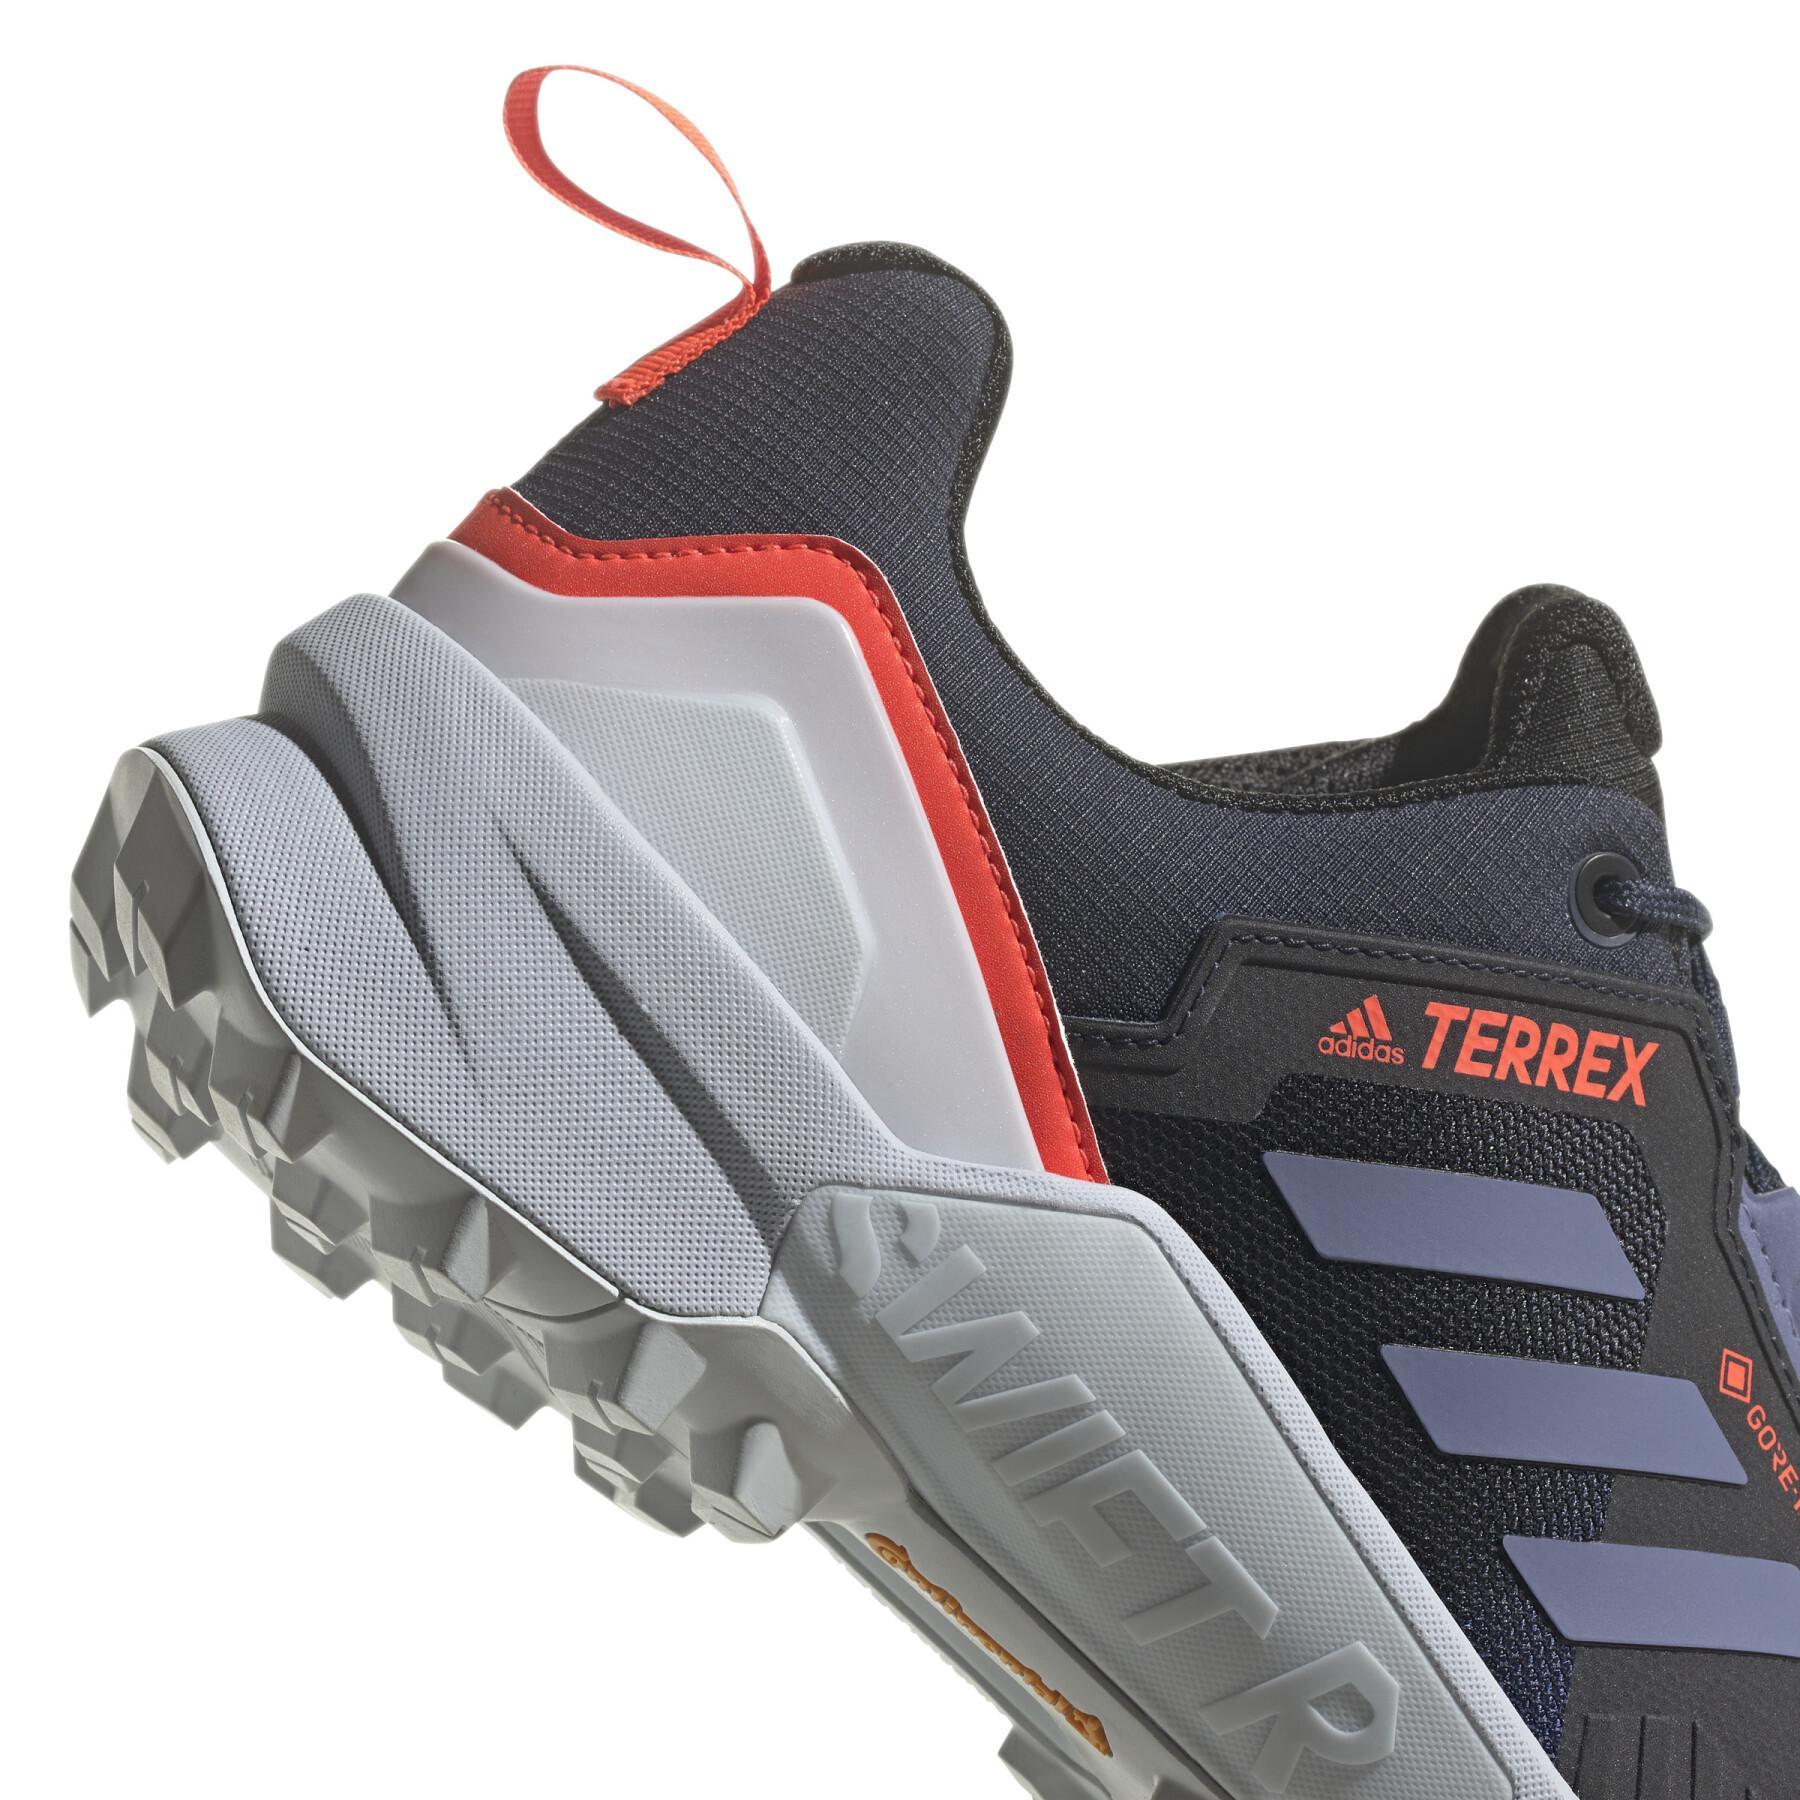 Chaussures de marche adidas Terrex Swift R3 Gore-Tex